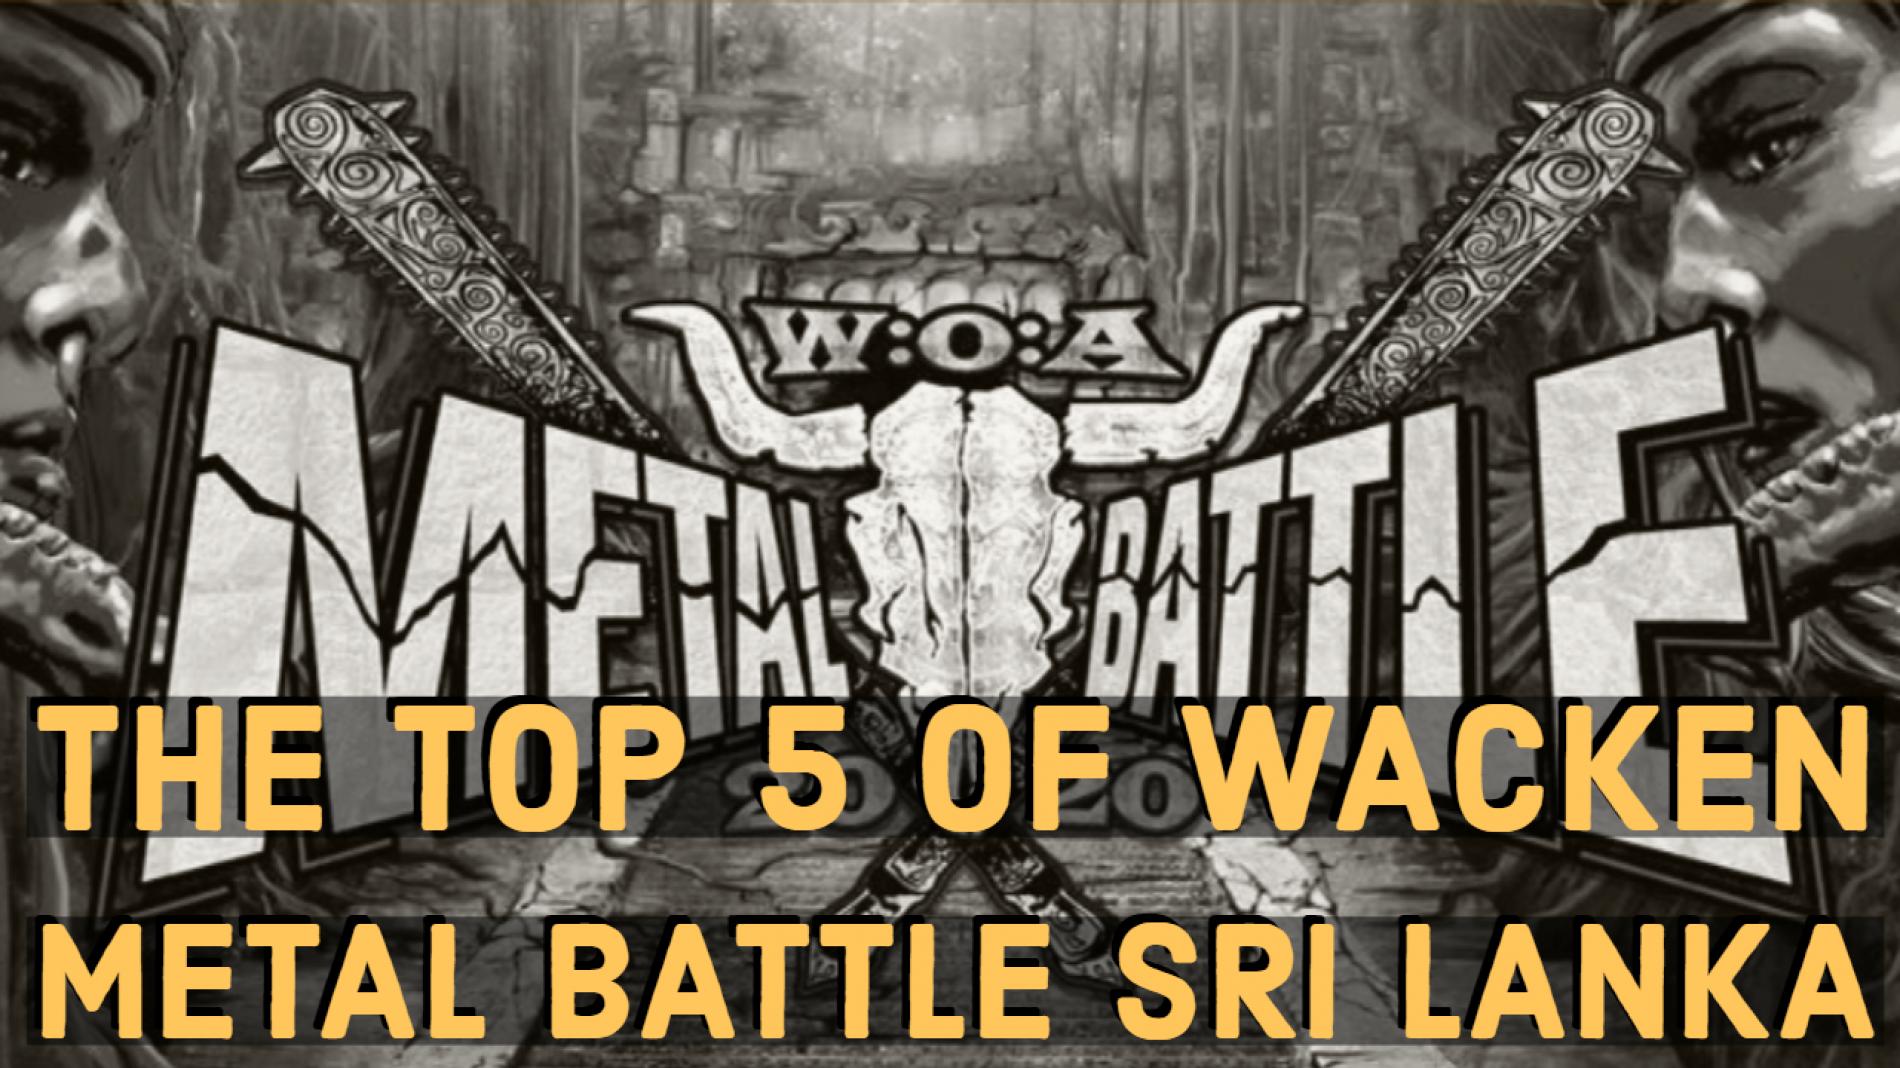 The Road To Wacken Metal Battle Sri Lanka!